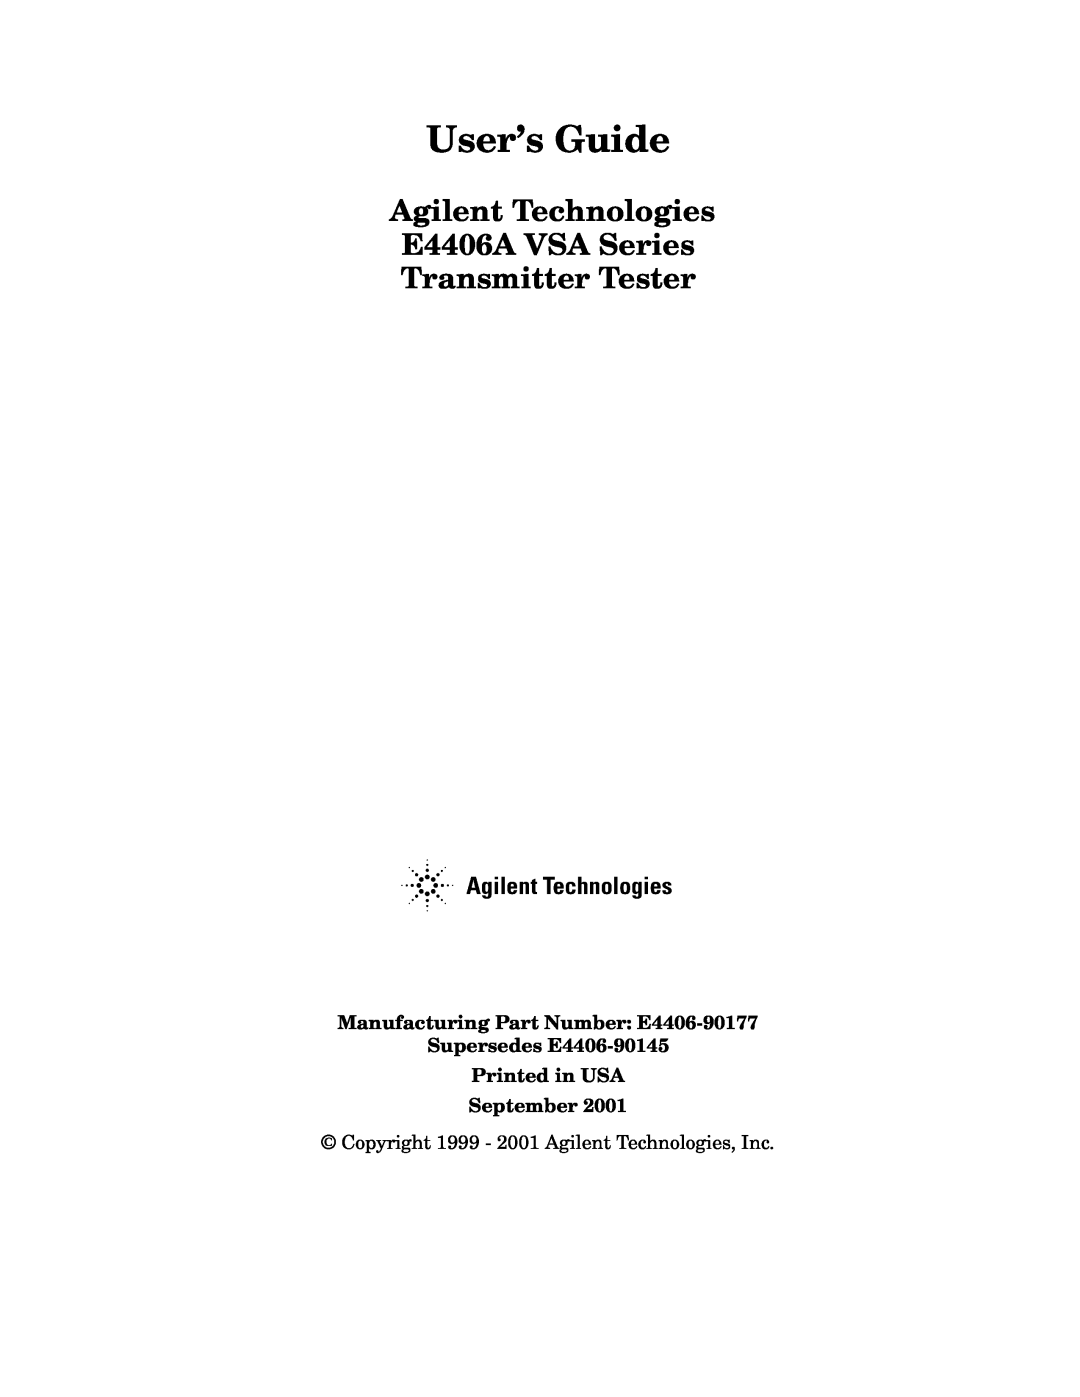 Agilent Technologies manual User’s Guide, Agilent Technologies E4406A VSA Series, Transmitter Tester 